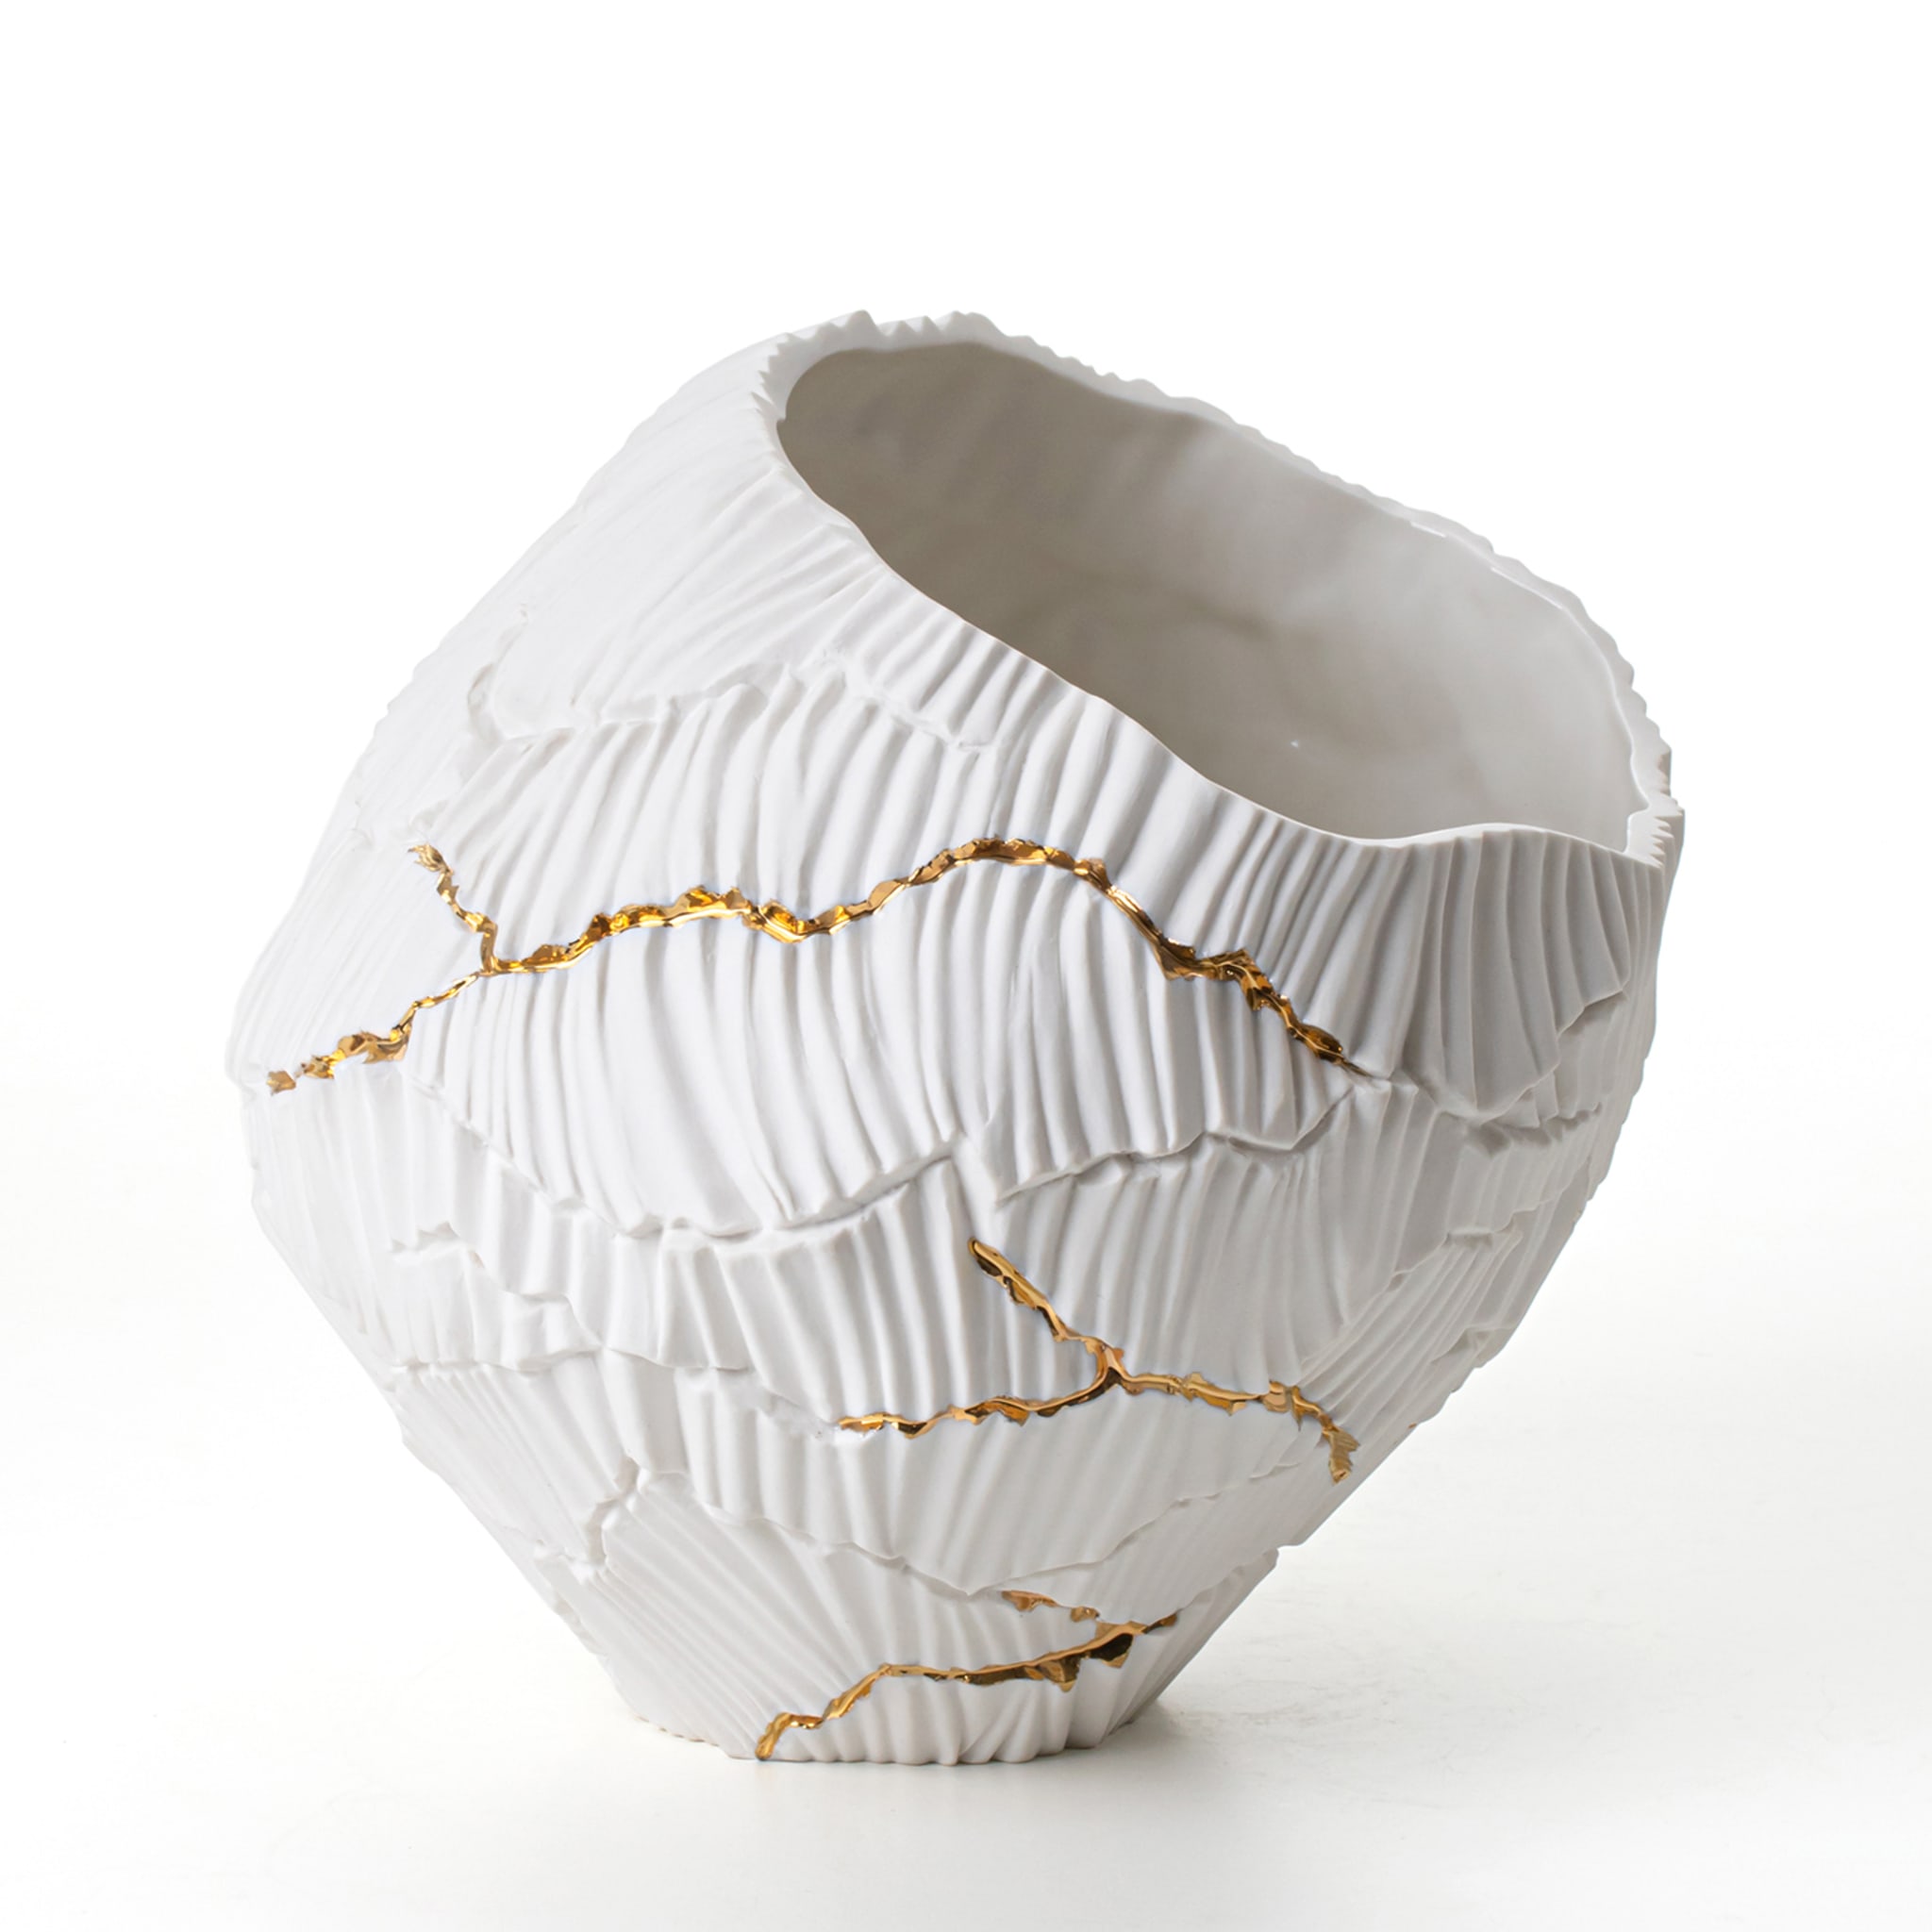 Zefiro Gold Cracks Decorative Bowl - Alternative view 1